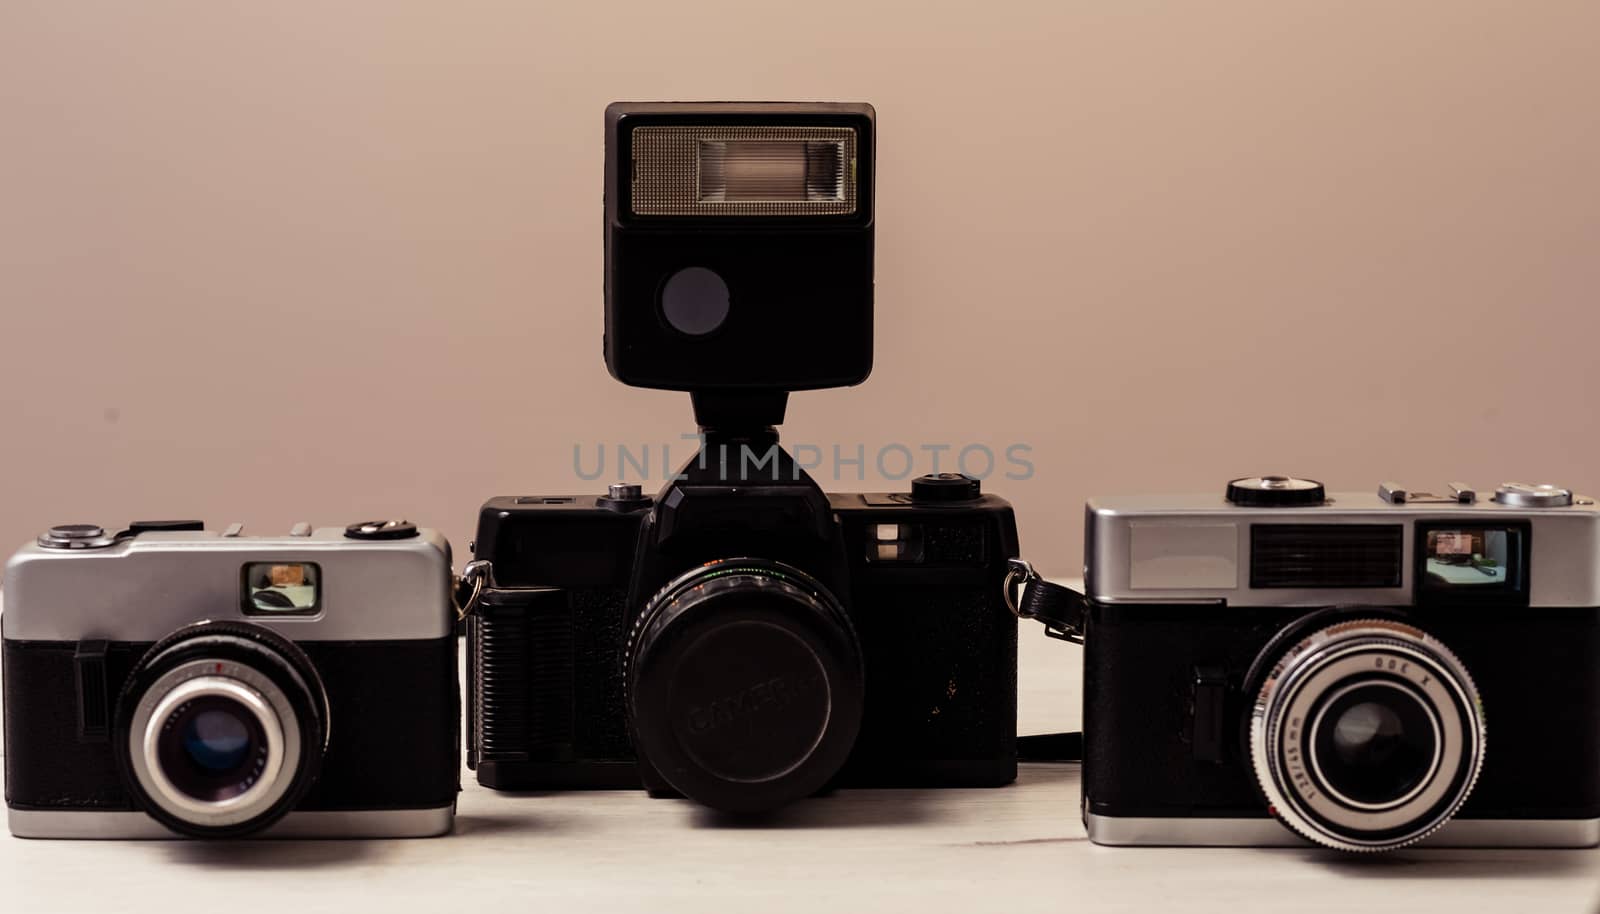 old miniature camera by jcdiazhidalgo